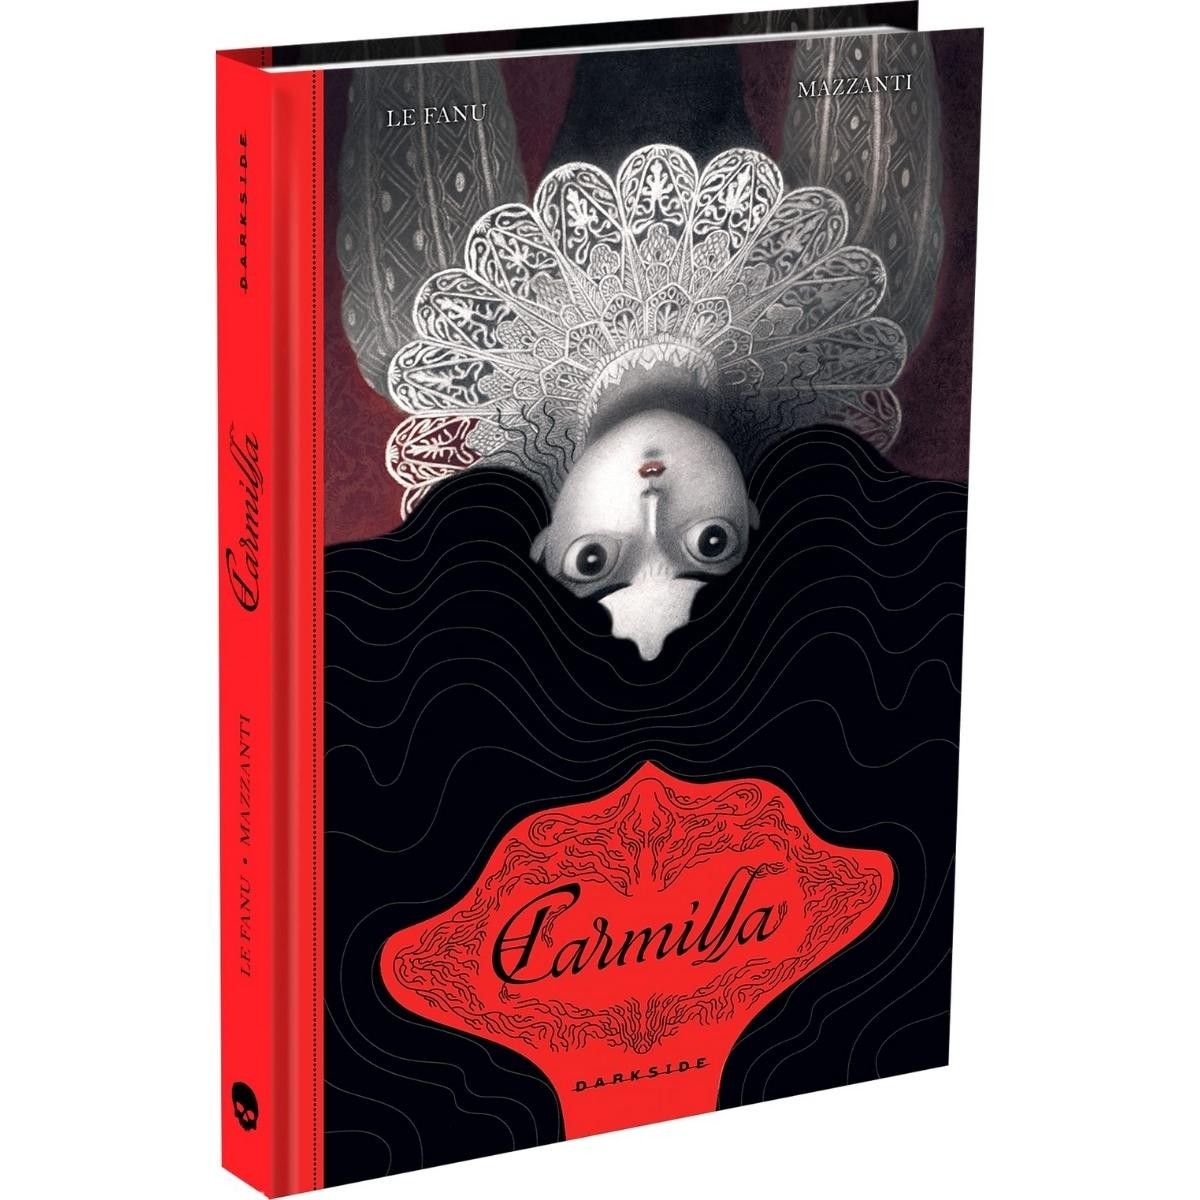 Carmilla - DarkSide